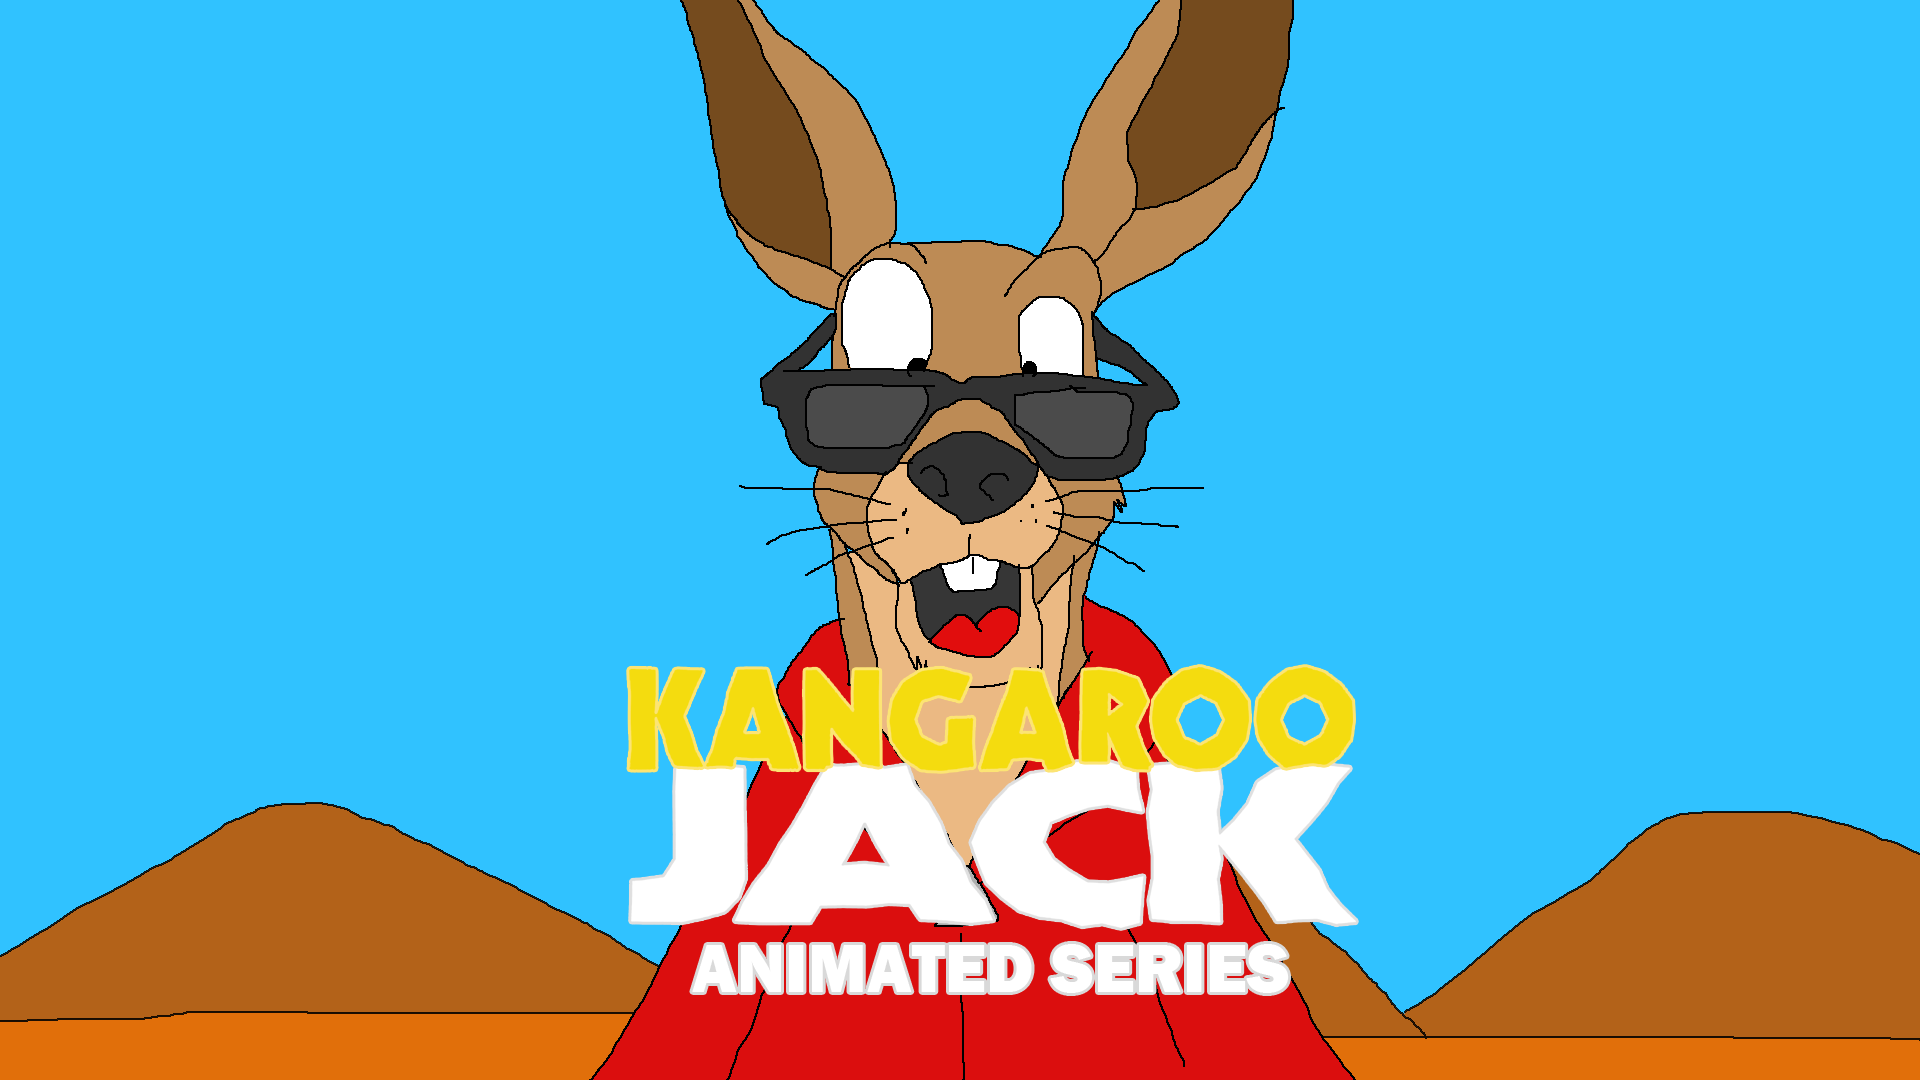 Kangaroo Jack (Animated Series) by TomArmstrong20 on DeviantArt